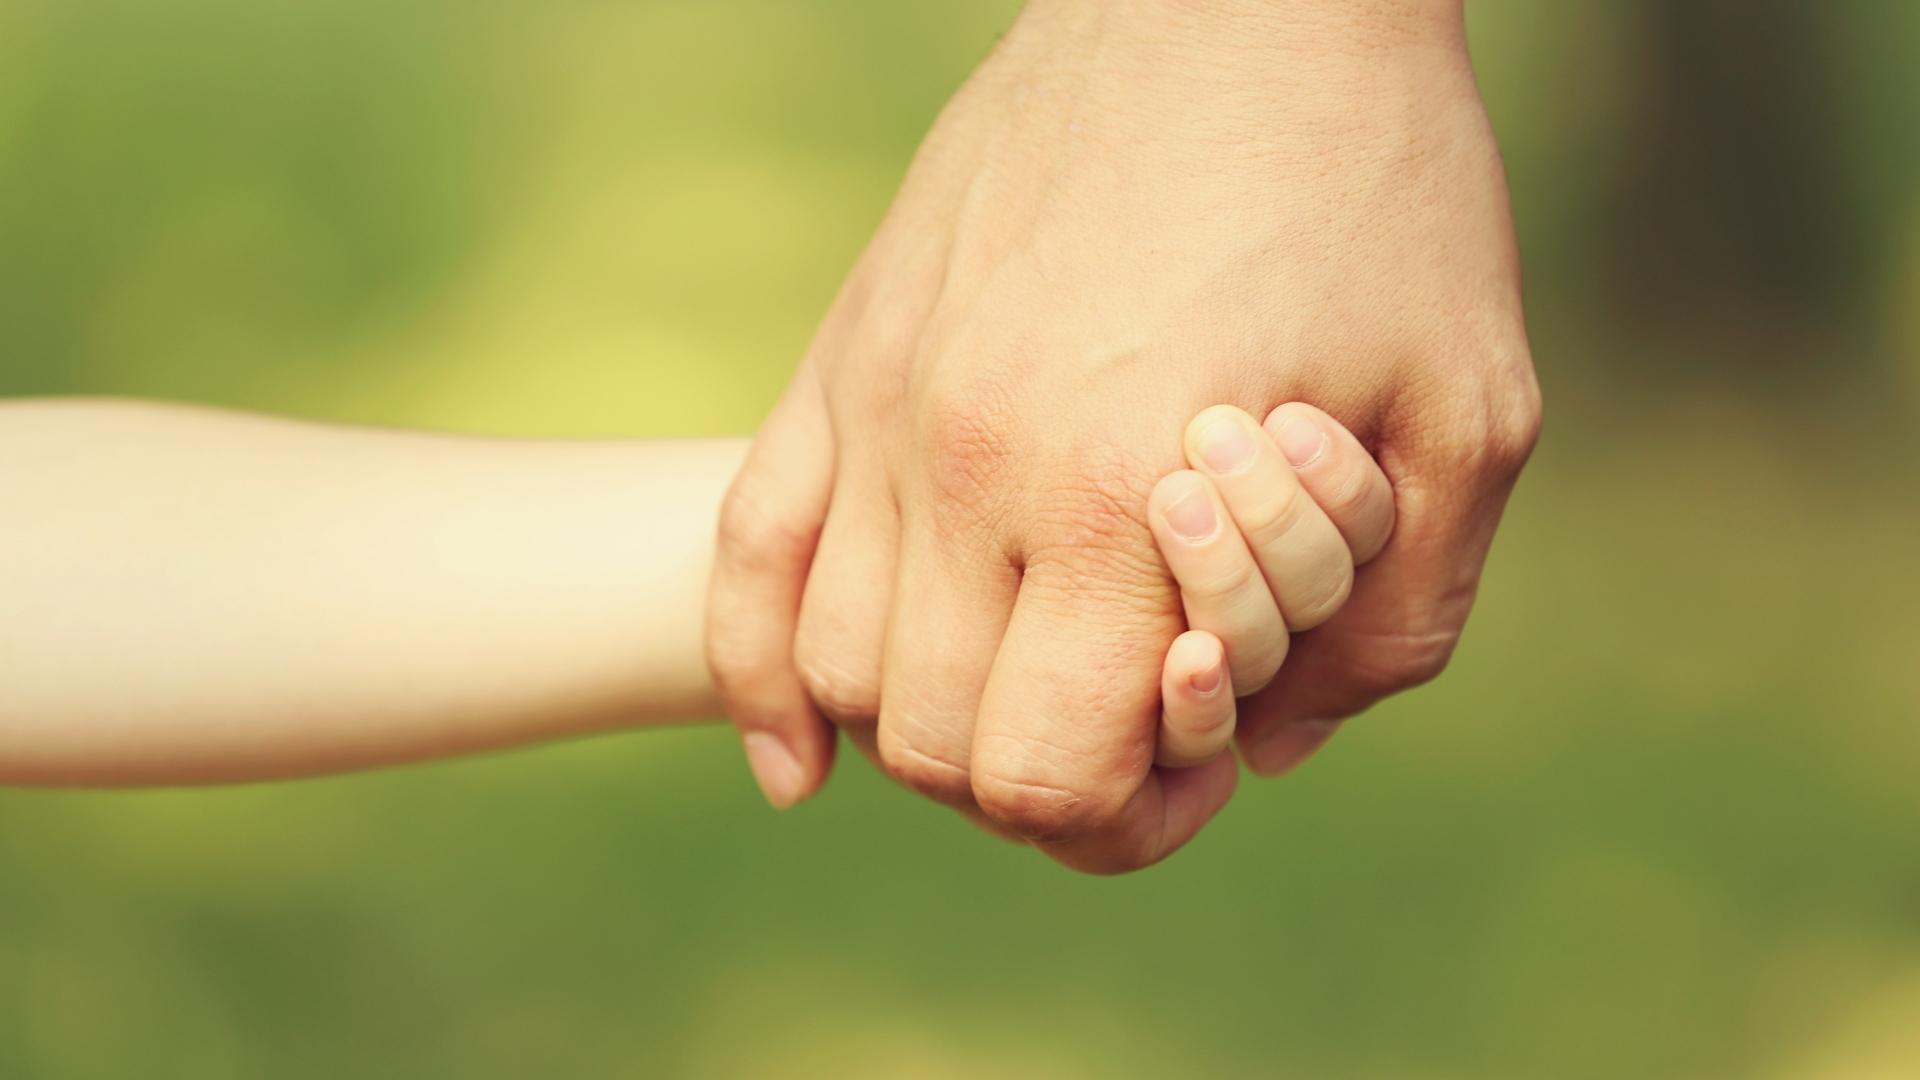 Child's hand holding parent's hand